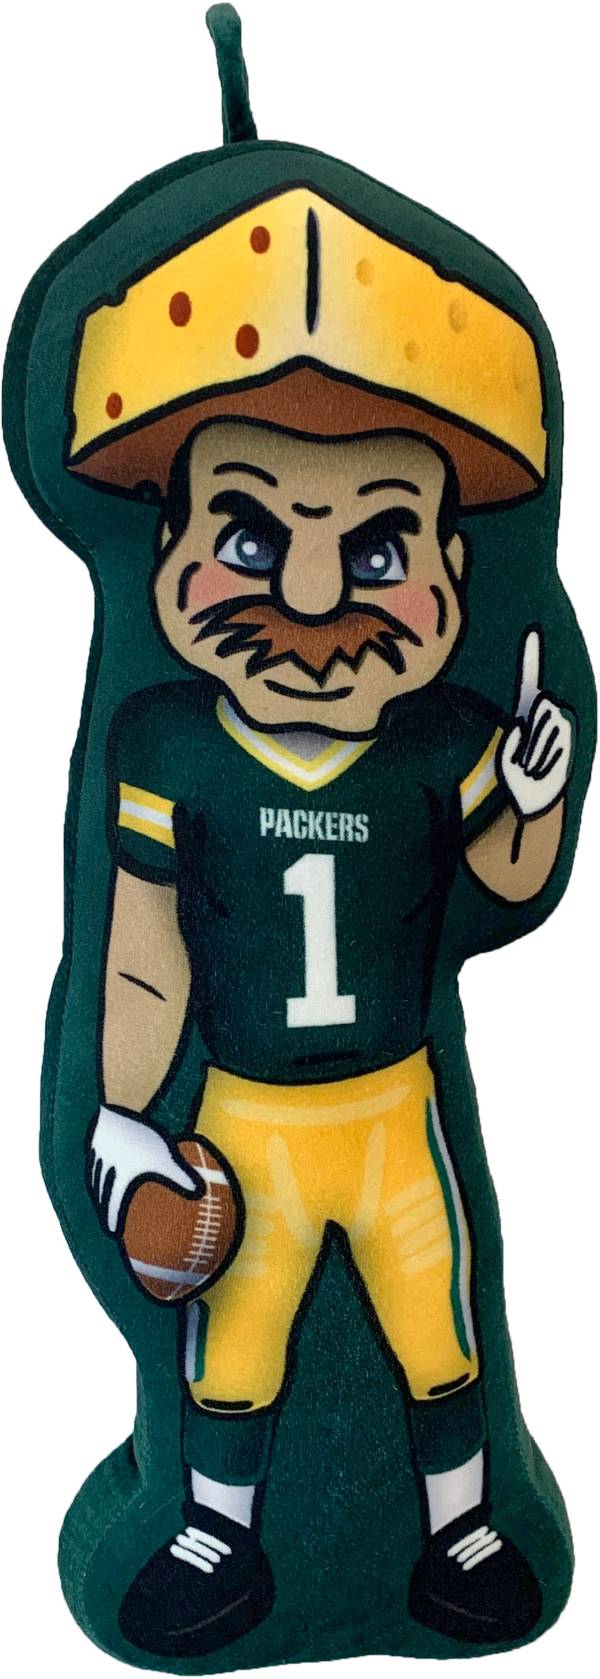 Pegasus Sports Green Bay Packers Mascot Pillow product image